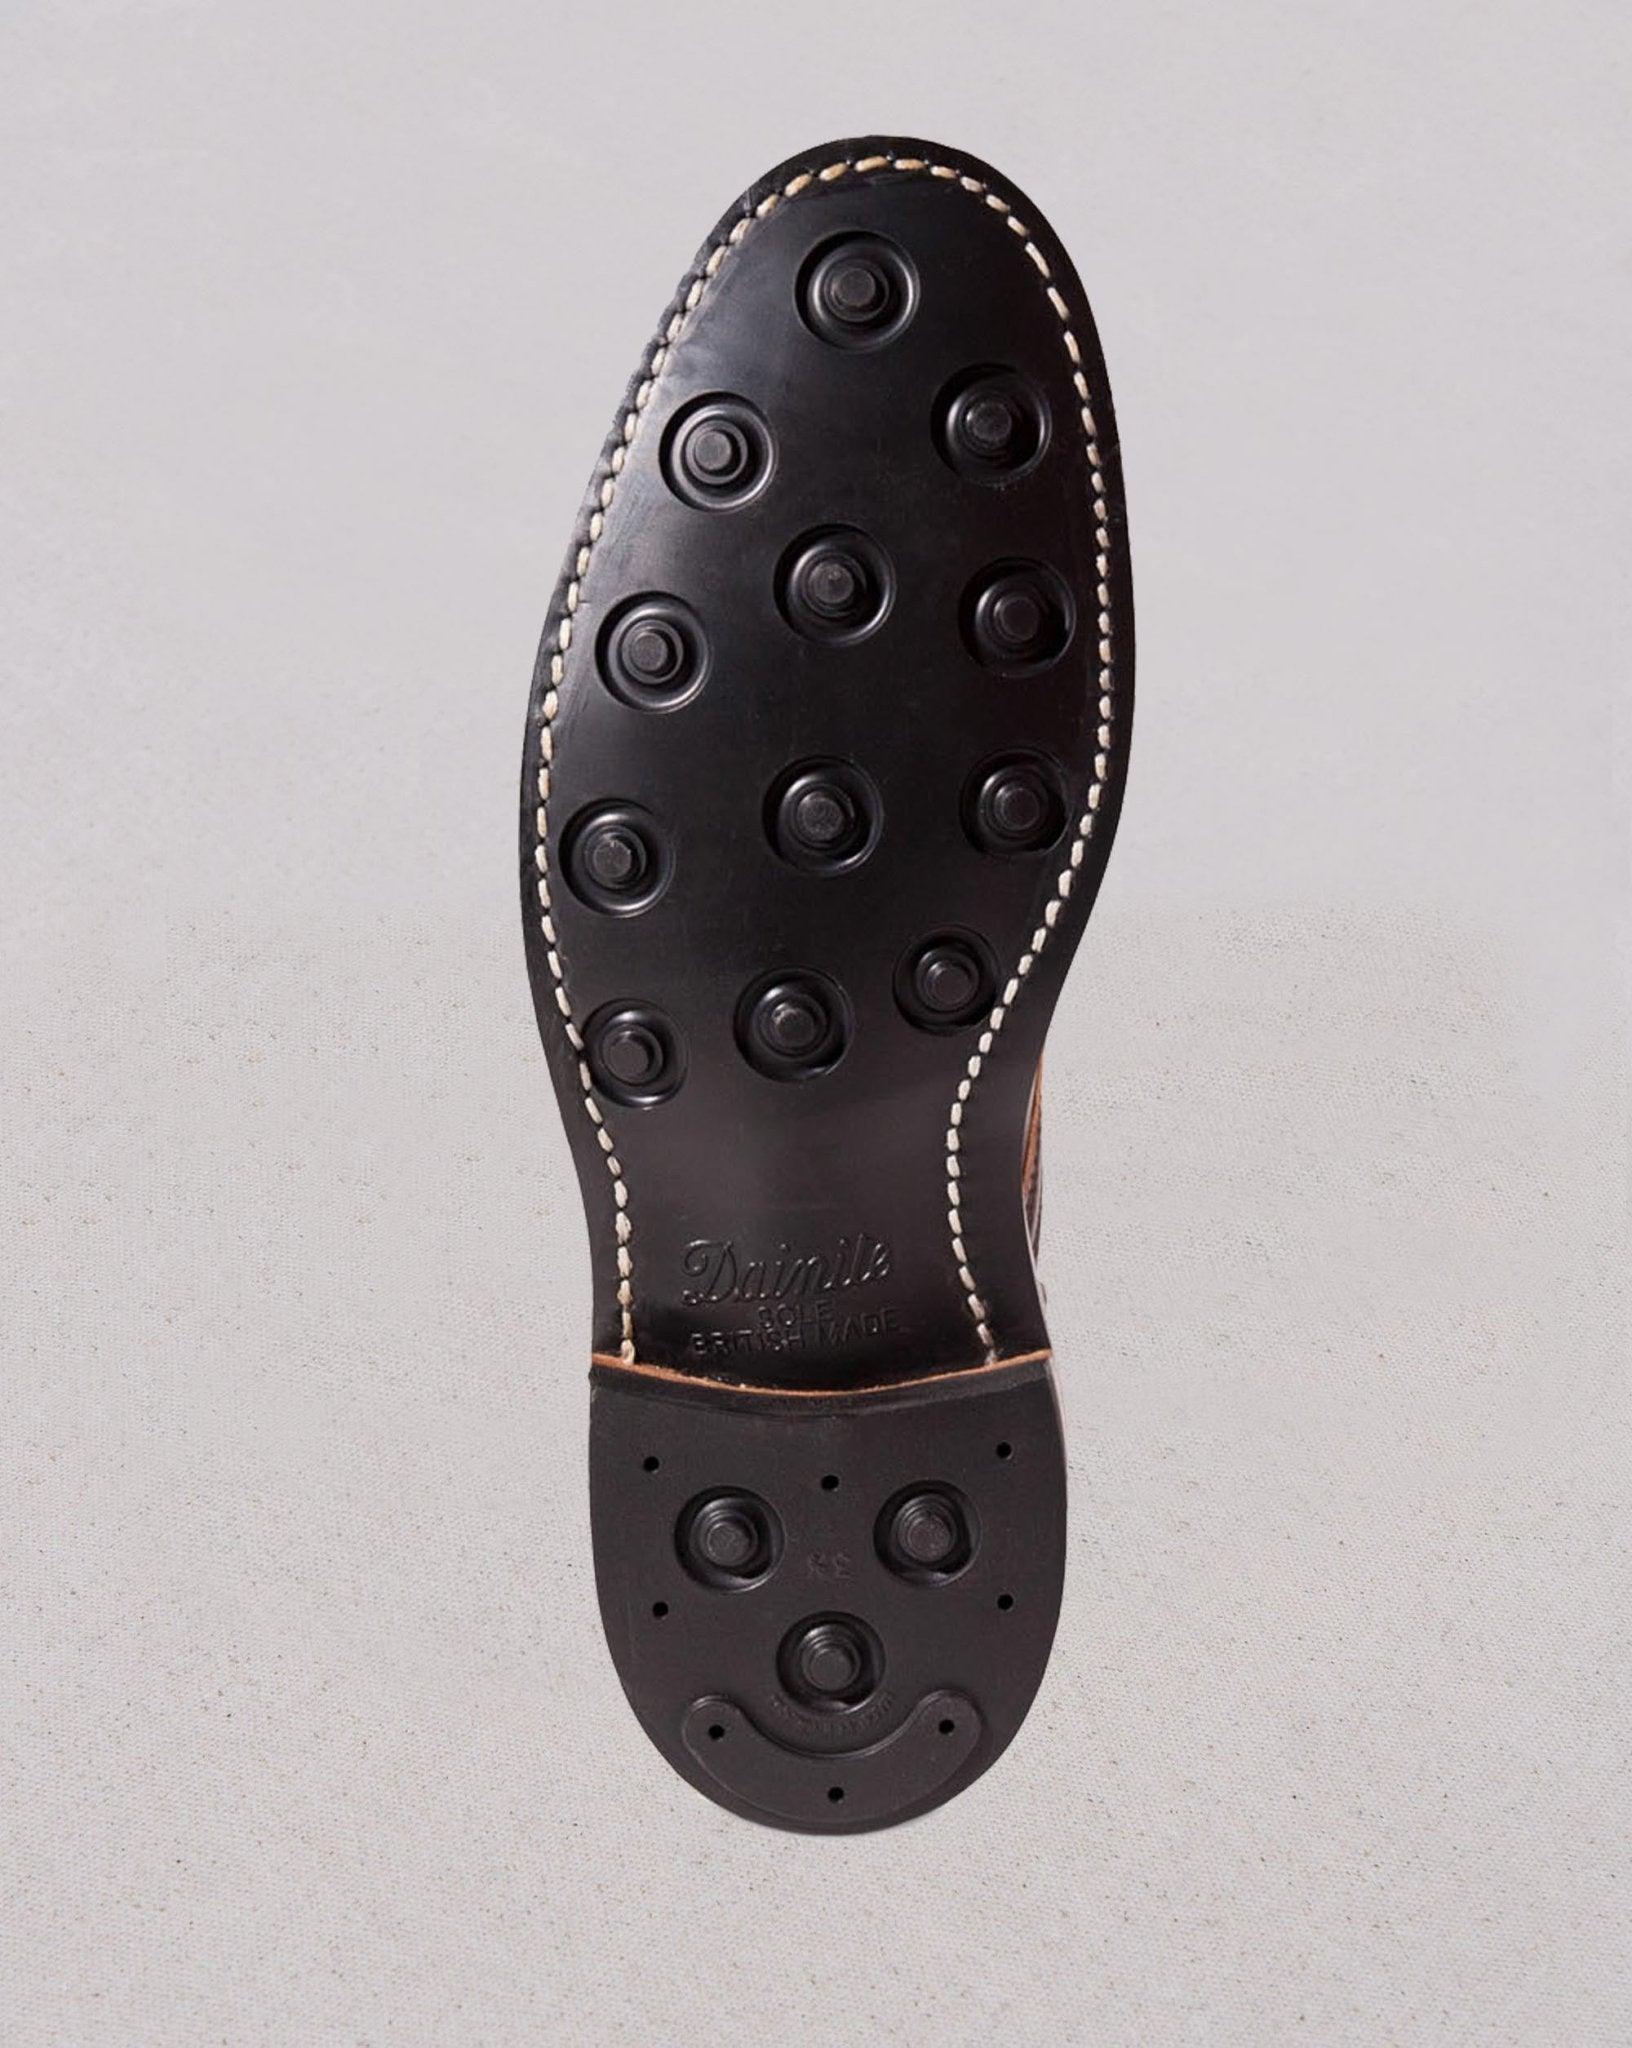 White's Boots MP-Sherman Toe Cap (Dainite Sole) - Black Chromexcel -Whites Boots - URAHARA